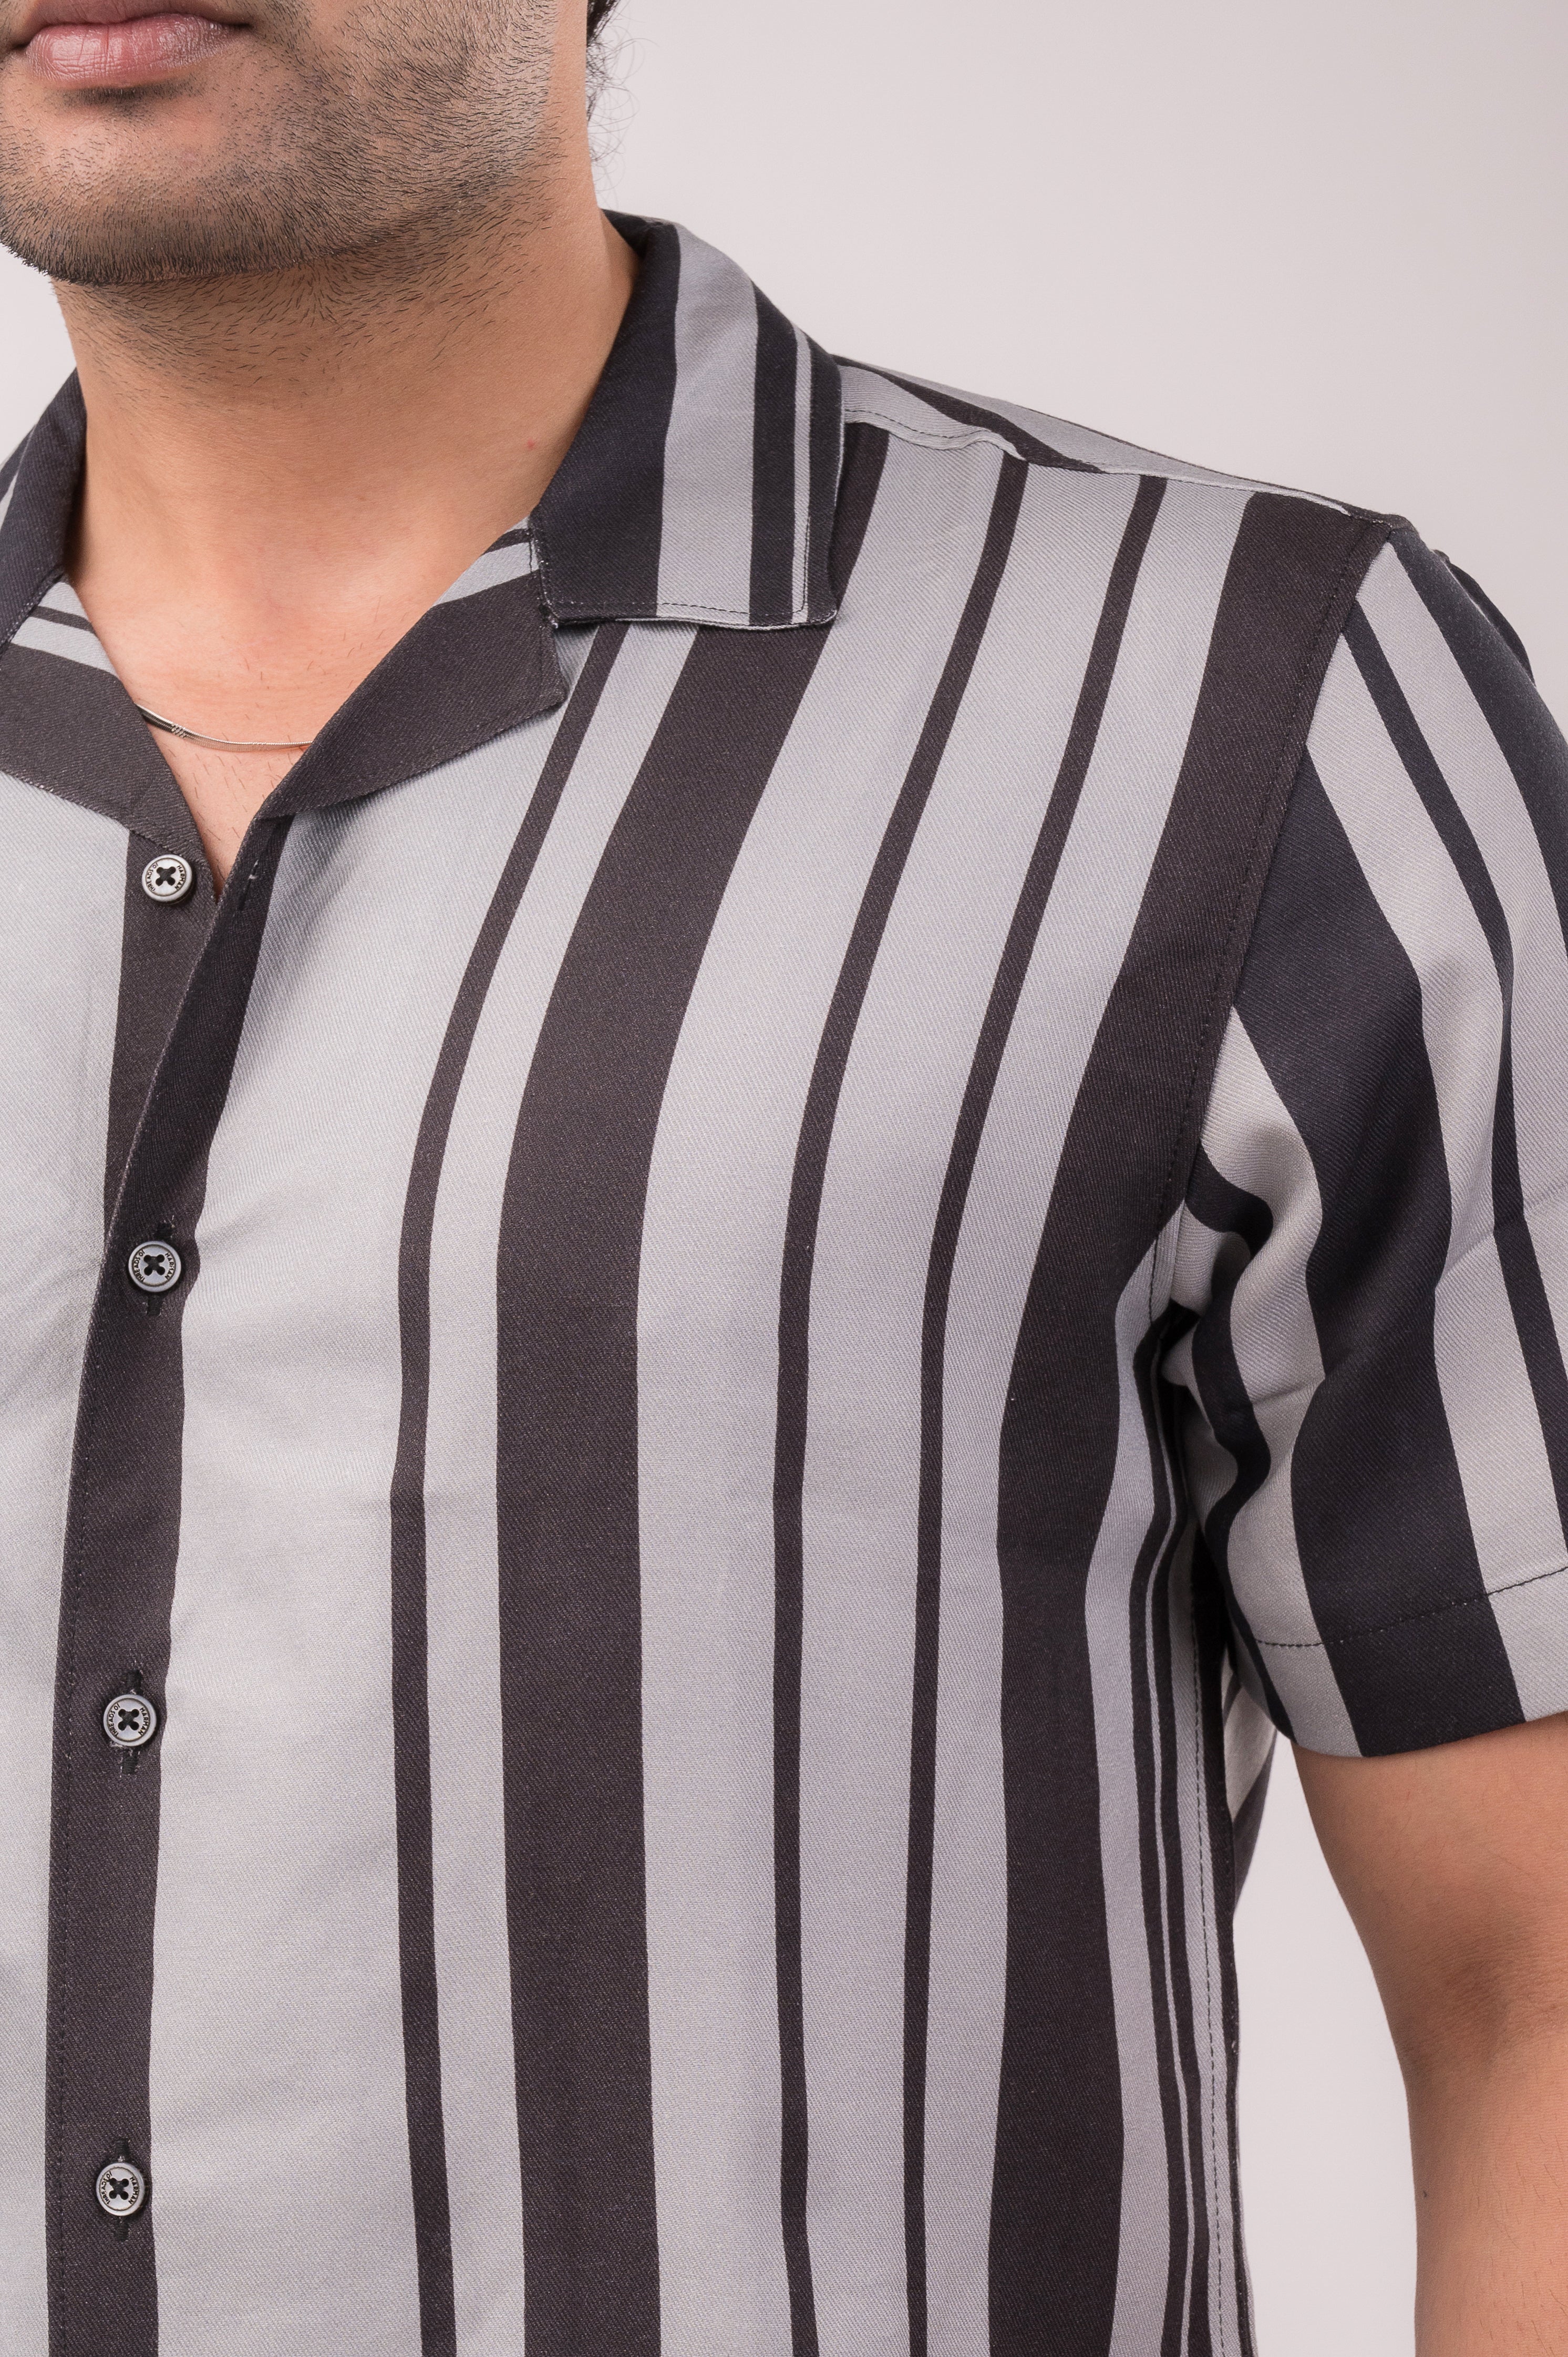 Black grey stripes Shirt